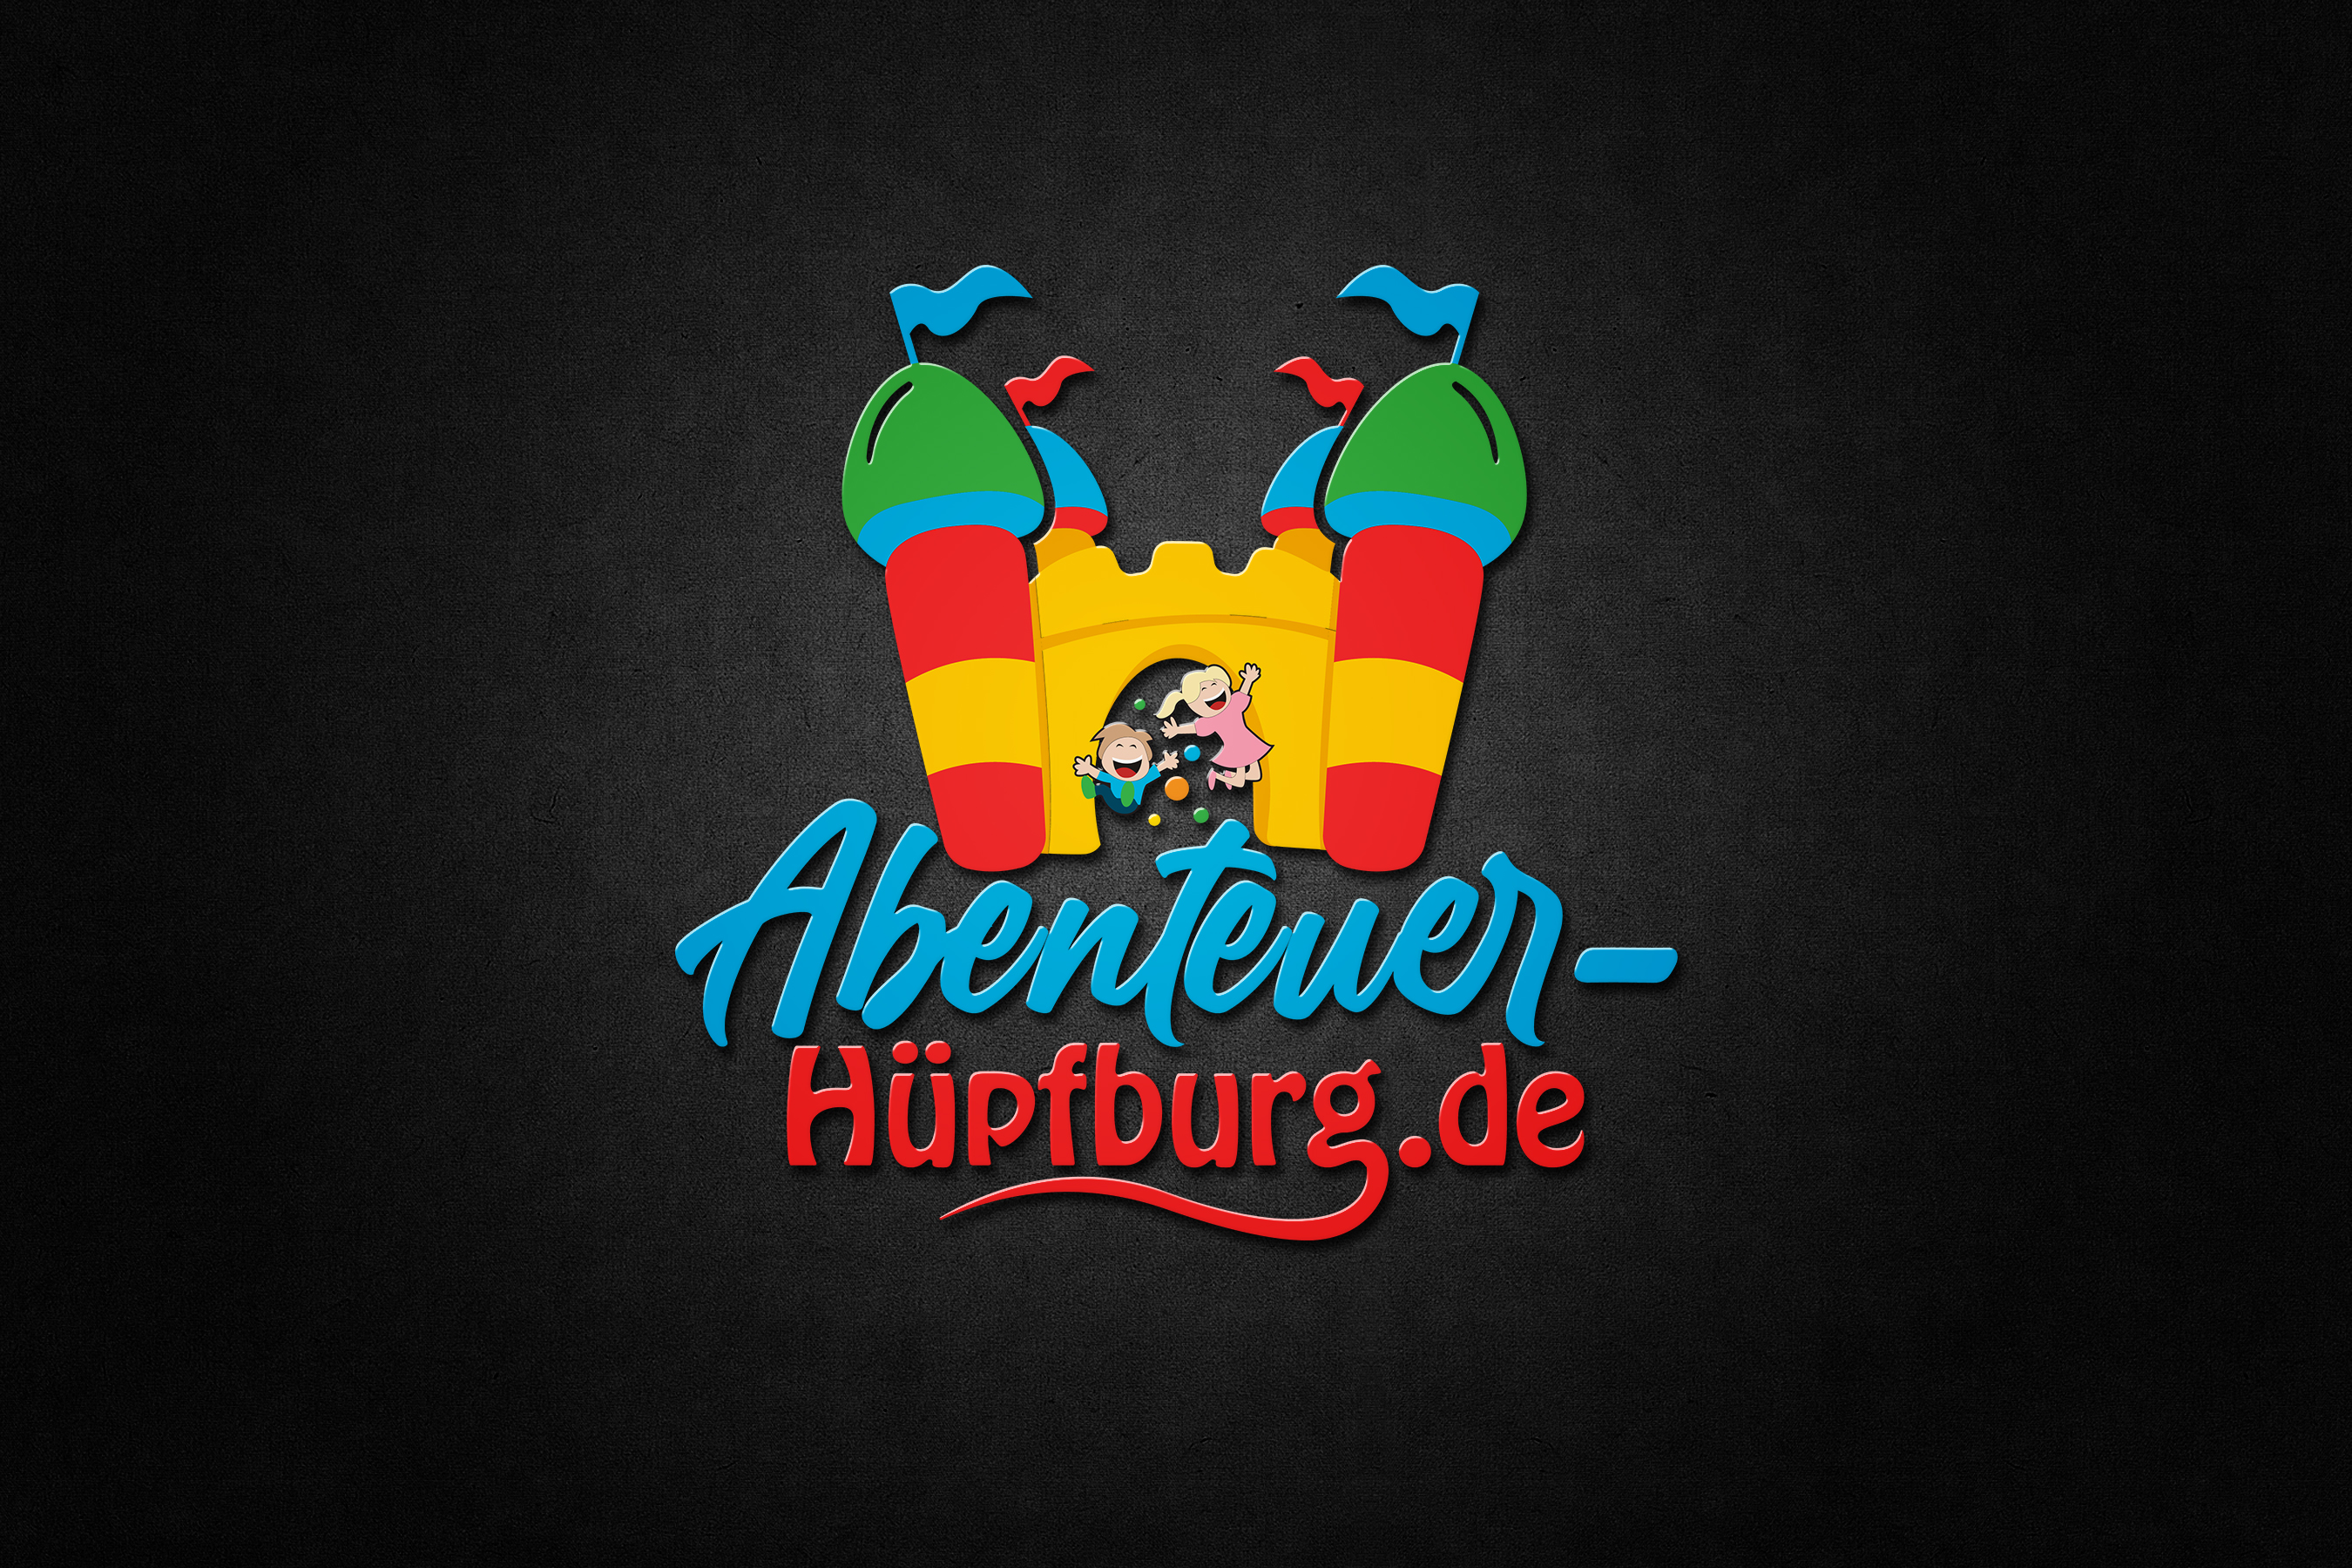 (c) Abenteuer-hüpfburg.de